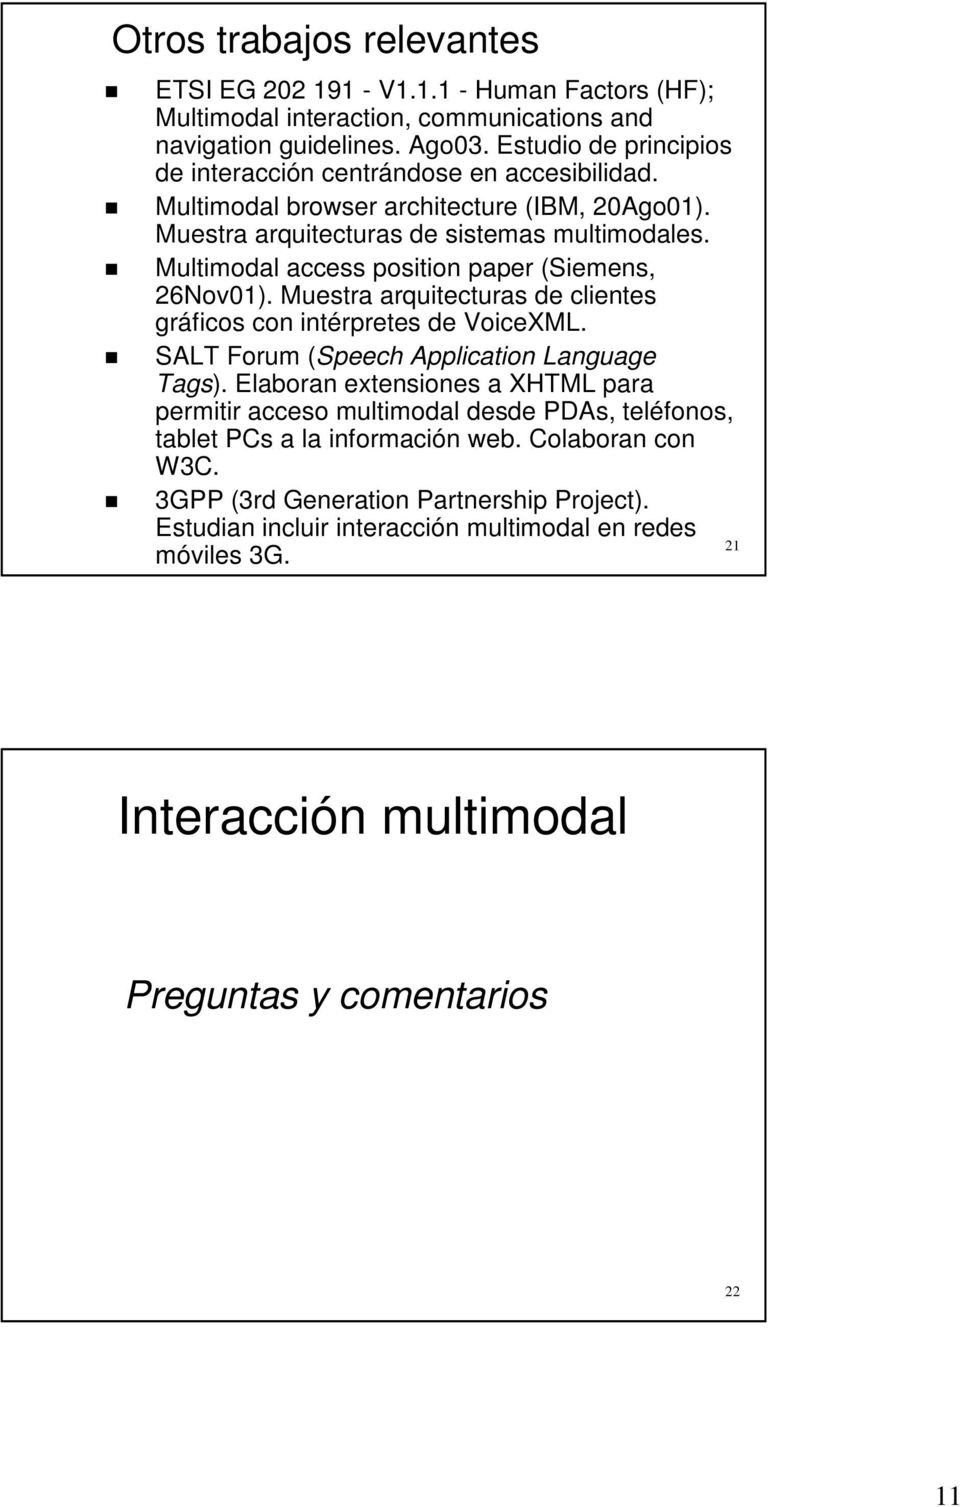 Multimodal access position paper (Siemens, 26Nov01). Muestra arquitecturas de clientes gráficos con intérpretes de VoiceXML. SALT Forum (Speech Application Language Tags).